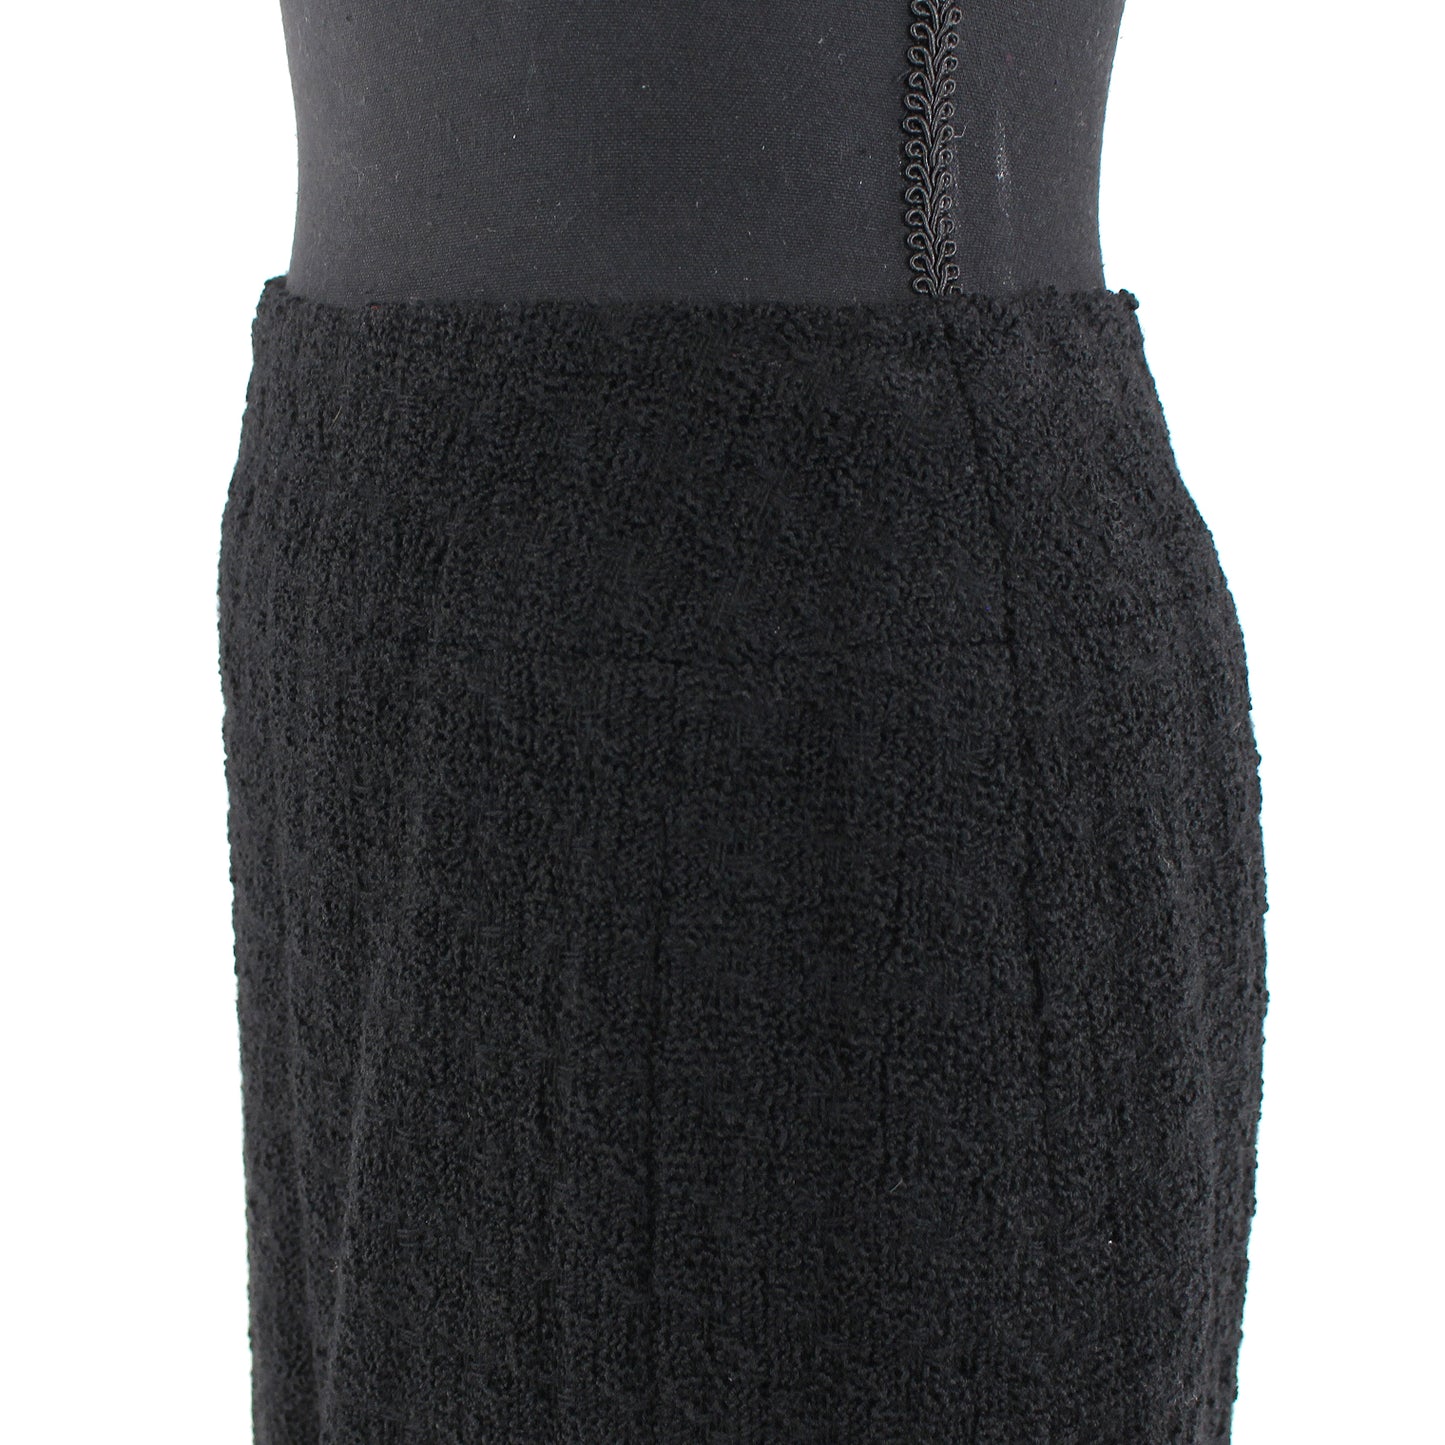 Chanel Boucle Tweed Pencil Skirt